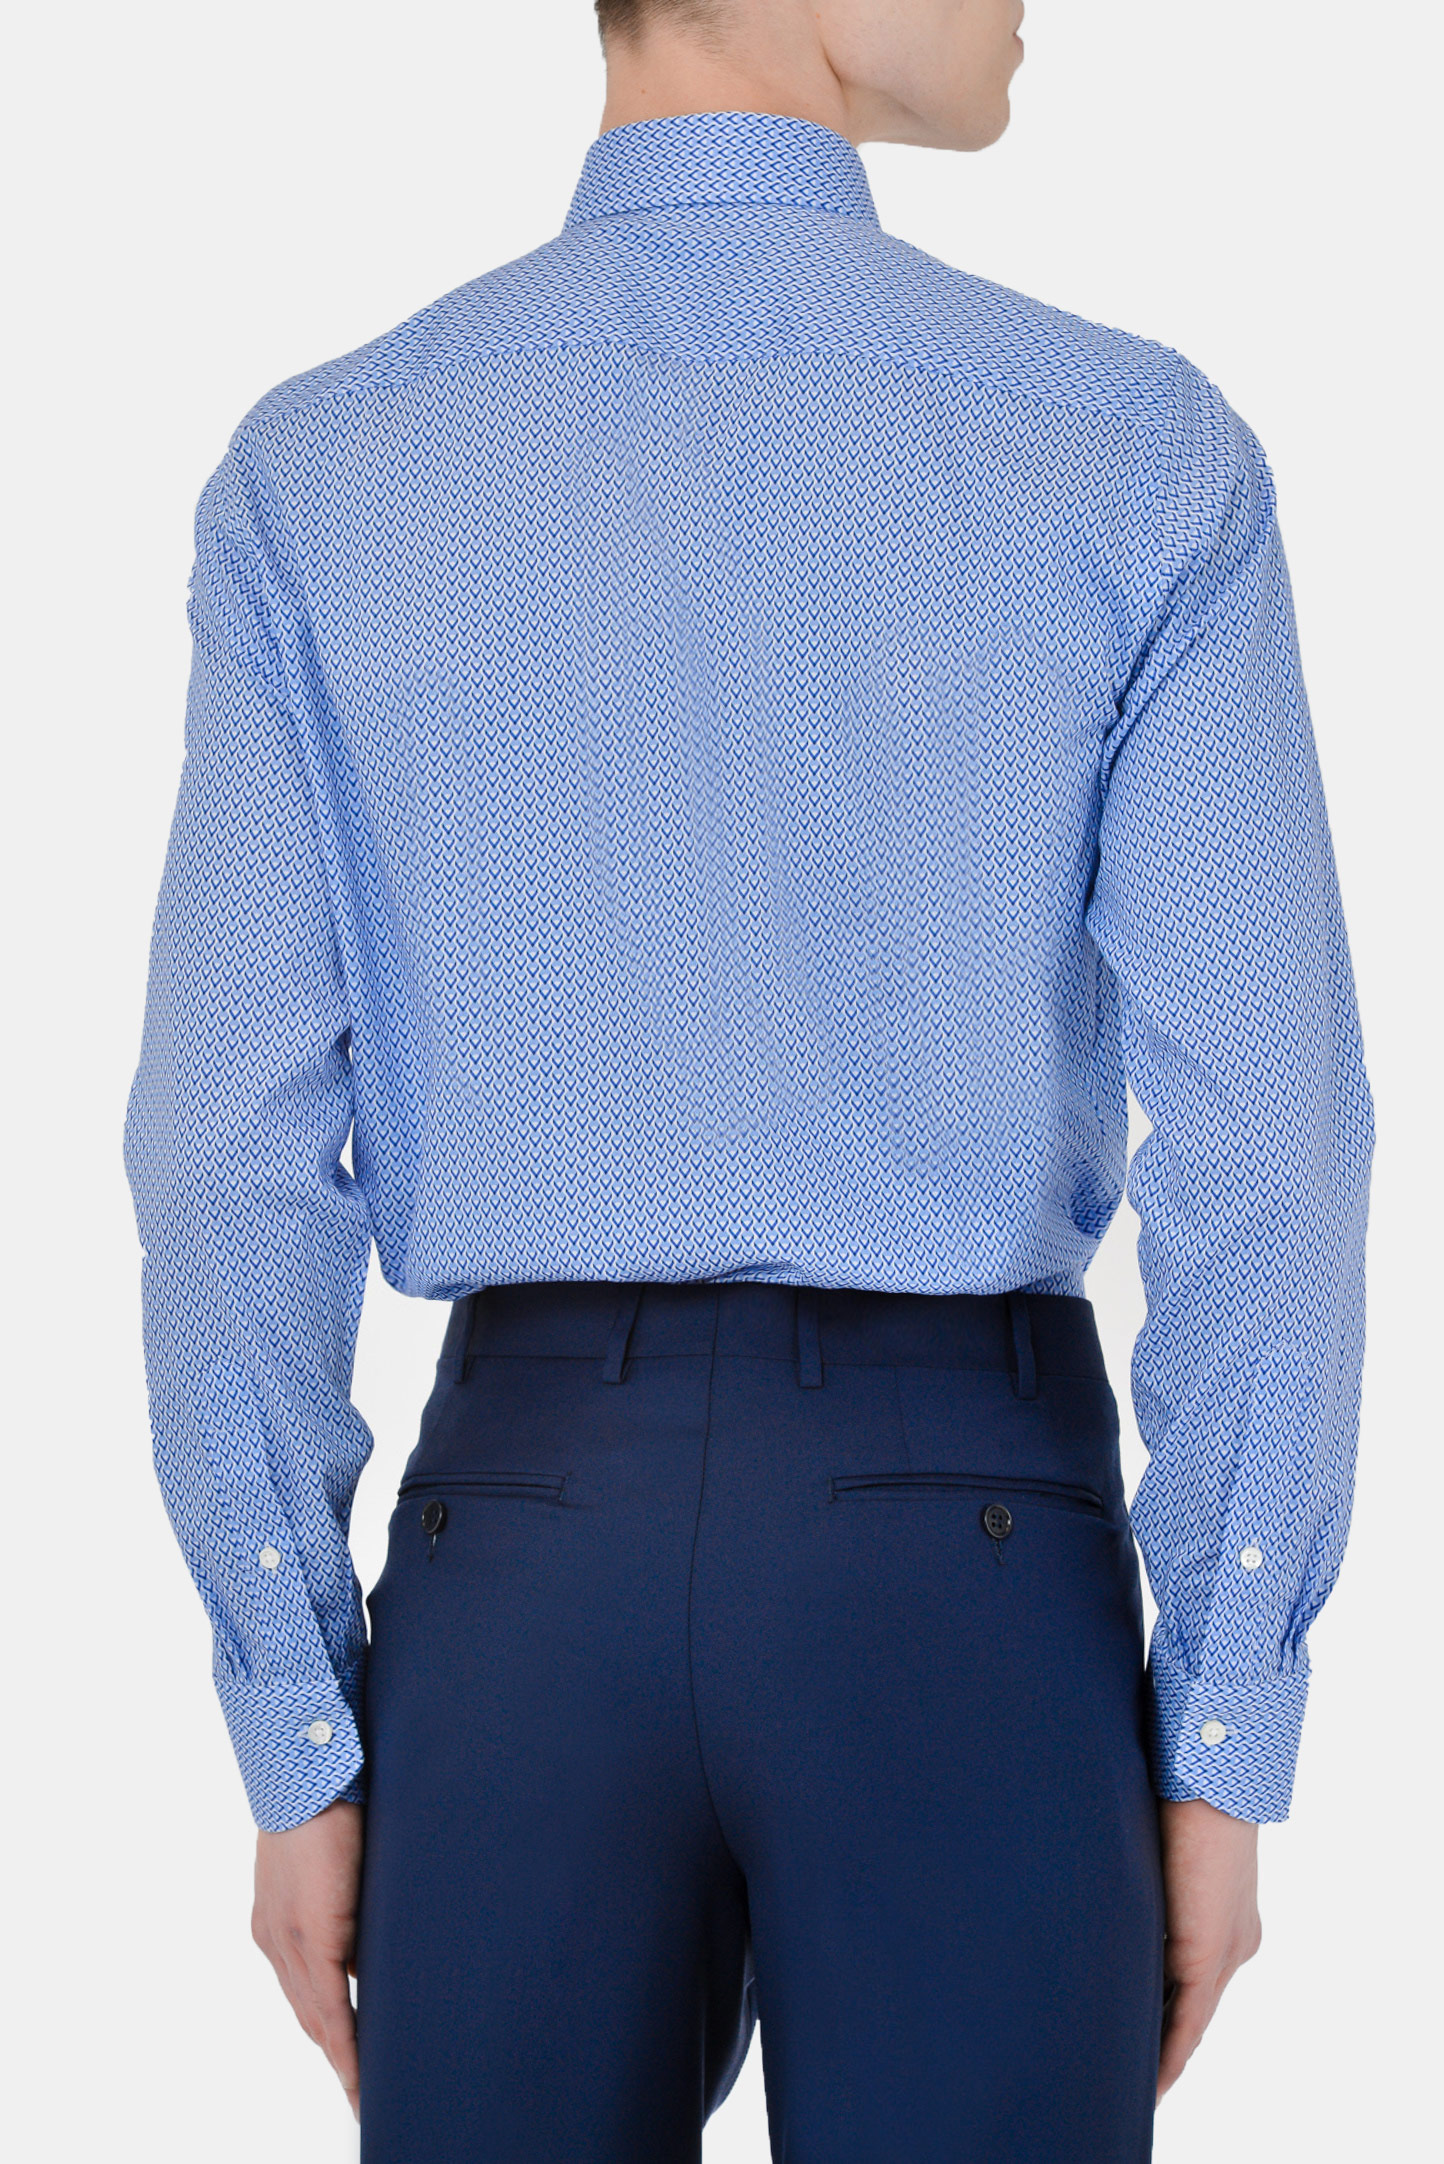 Рубашка CANALI GR02286/301, цвет: Синий, Мужской